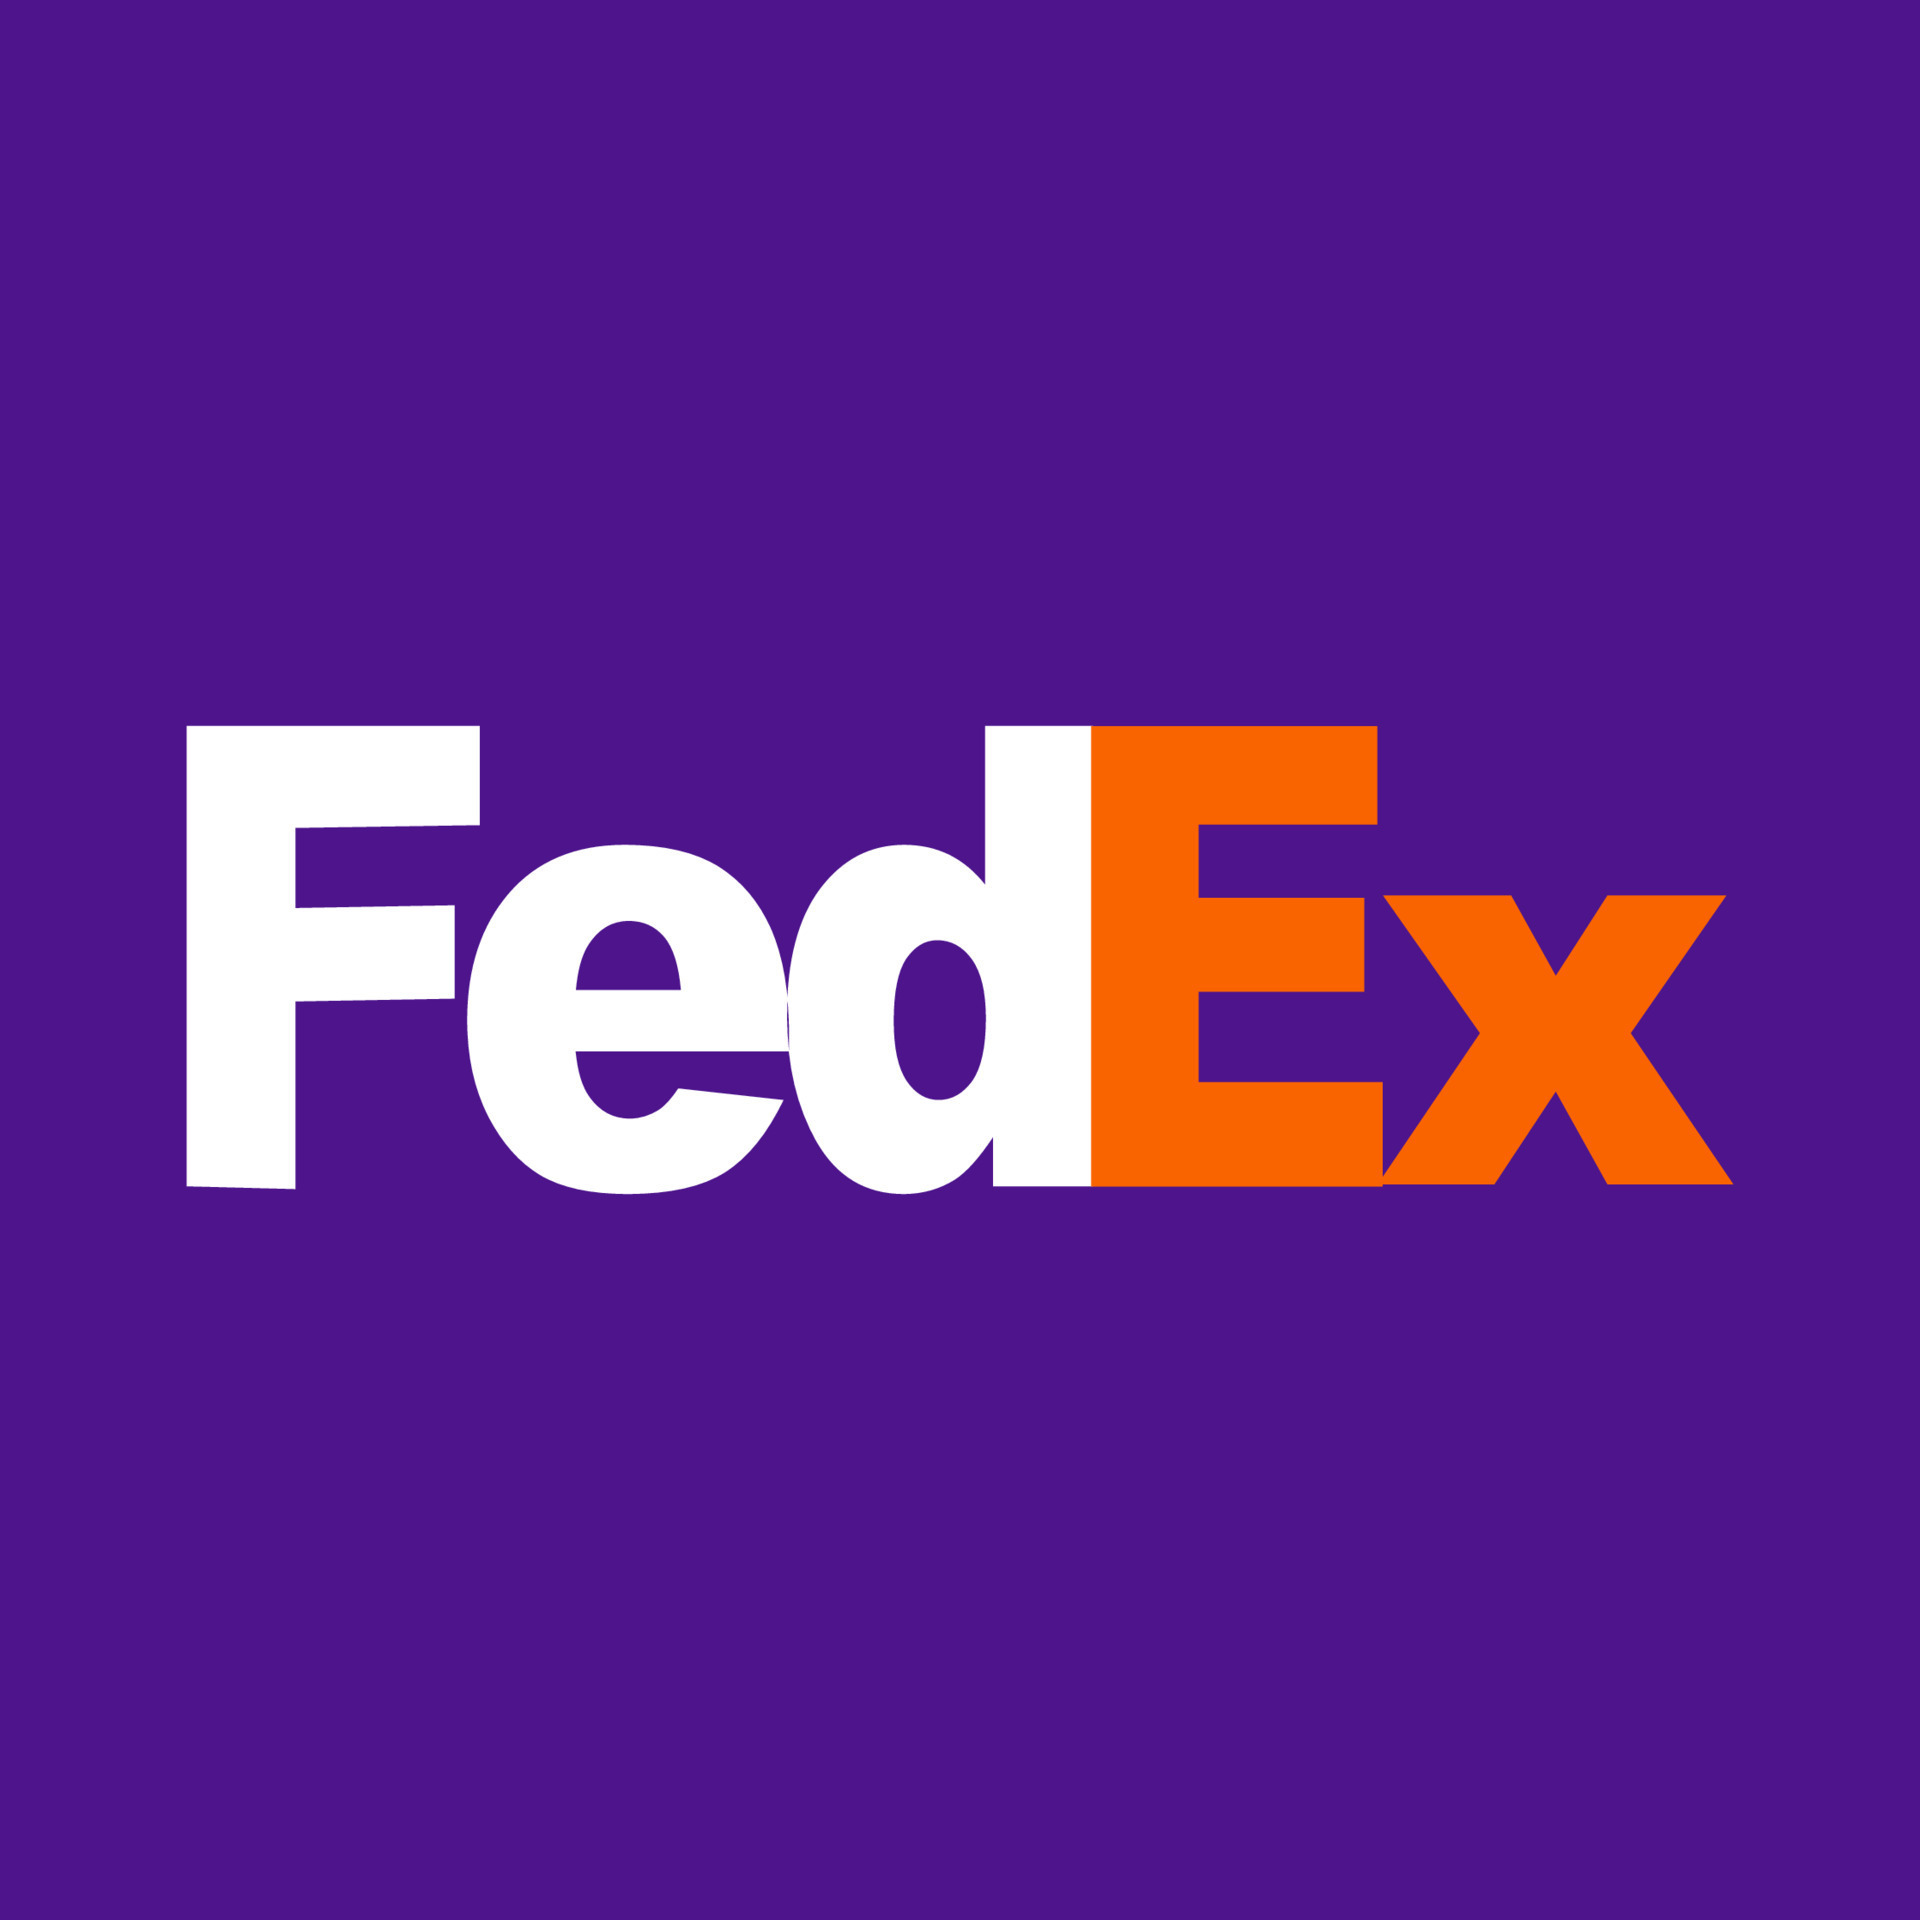 FedEx Logo: Design, History, and Evolution